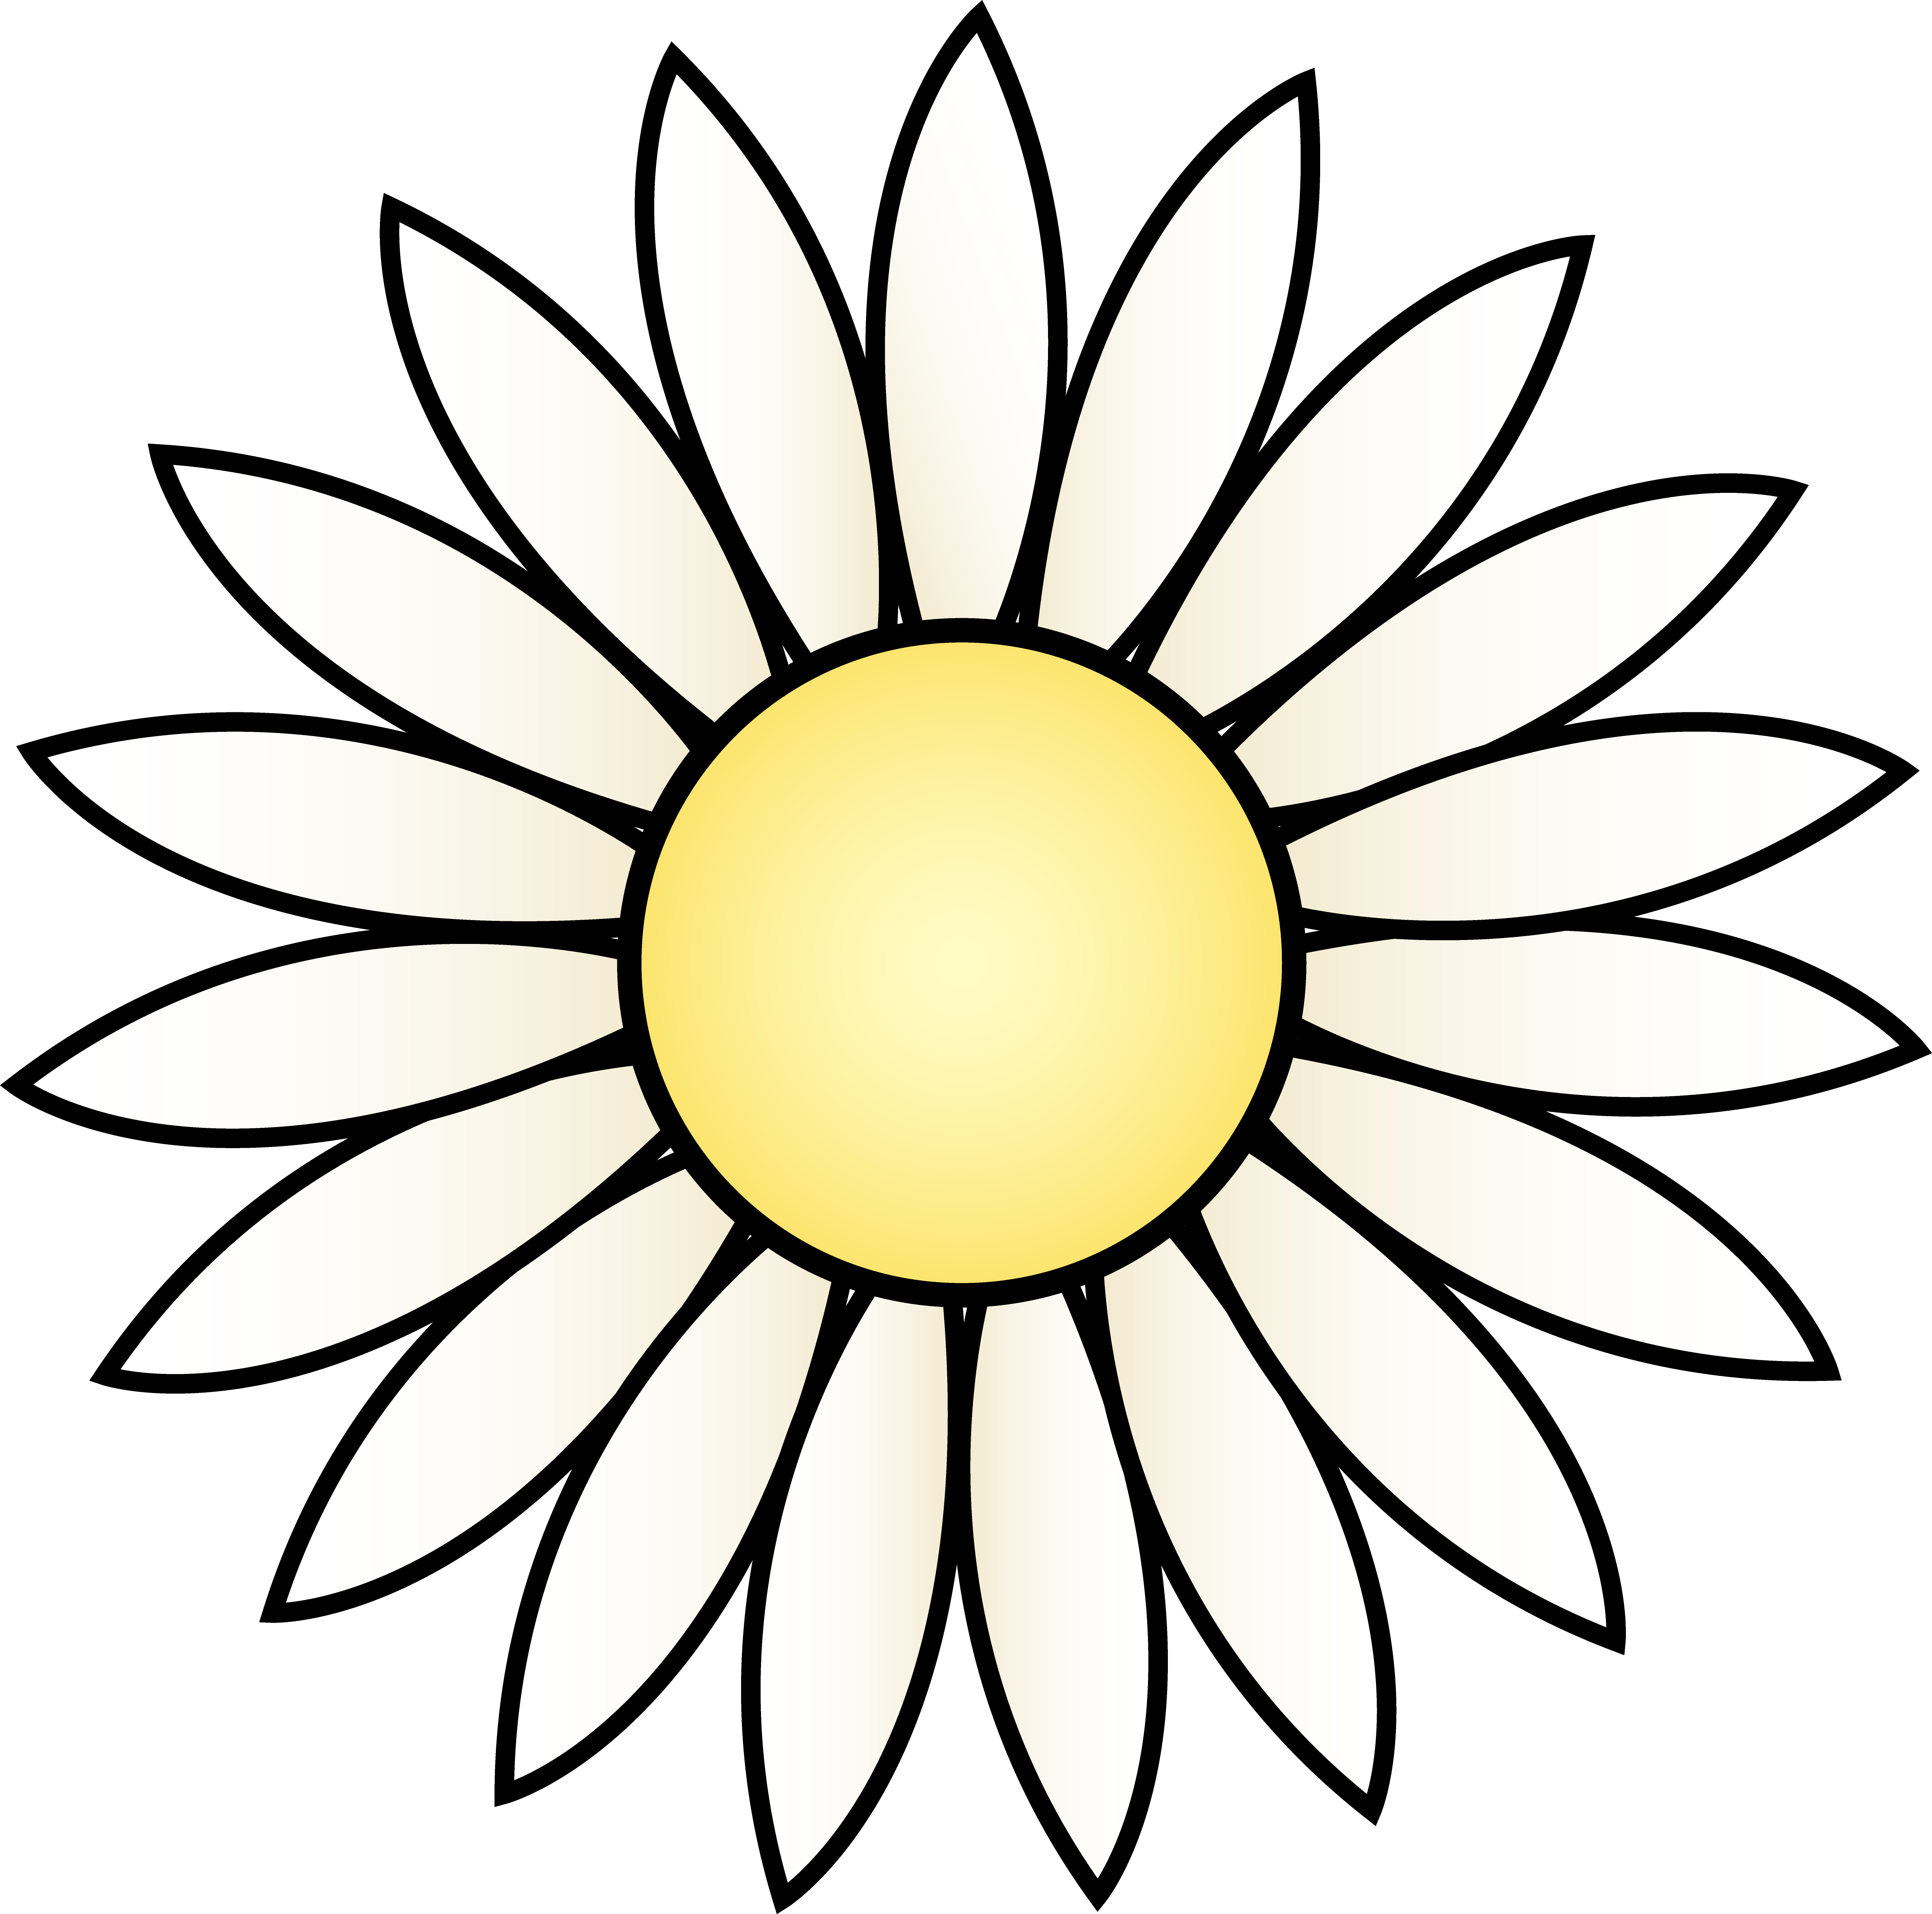 Daisy clip art free free clip - Daisy Flower Clip Art